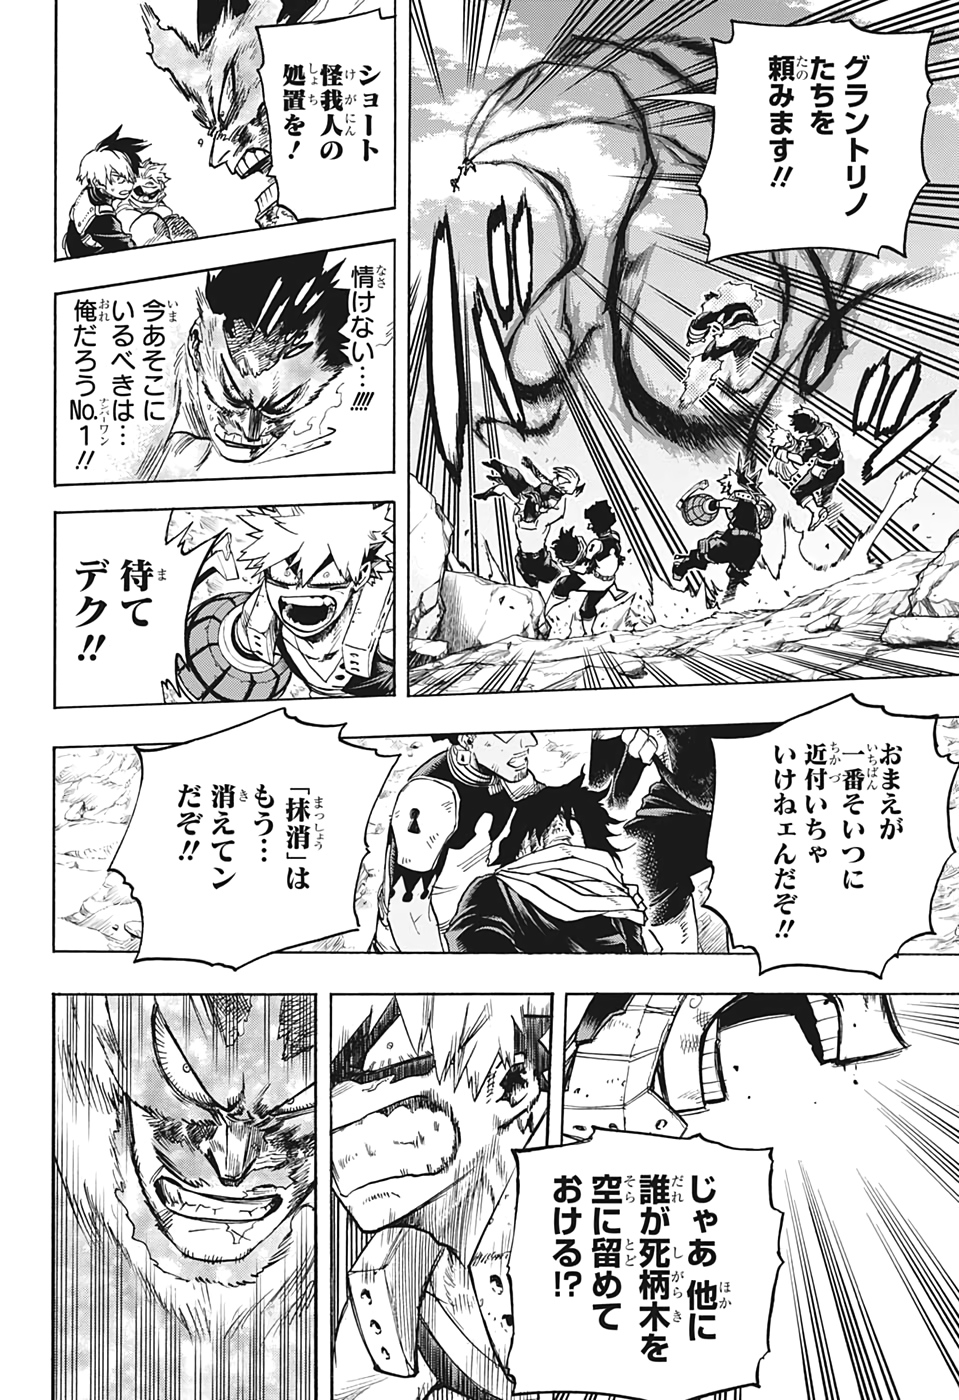 Boku no Hero Academia - Chapter 284 - Page 2